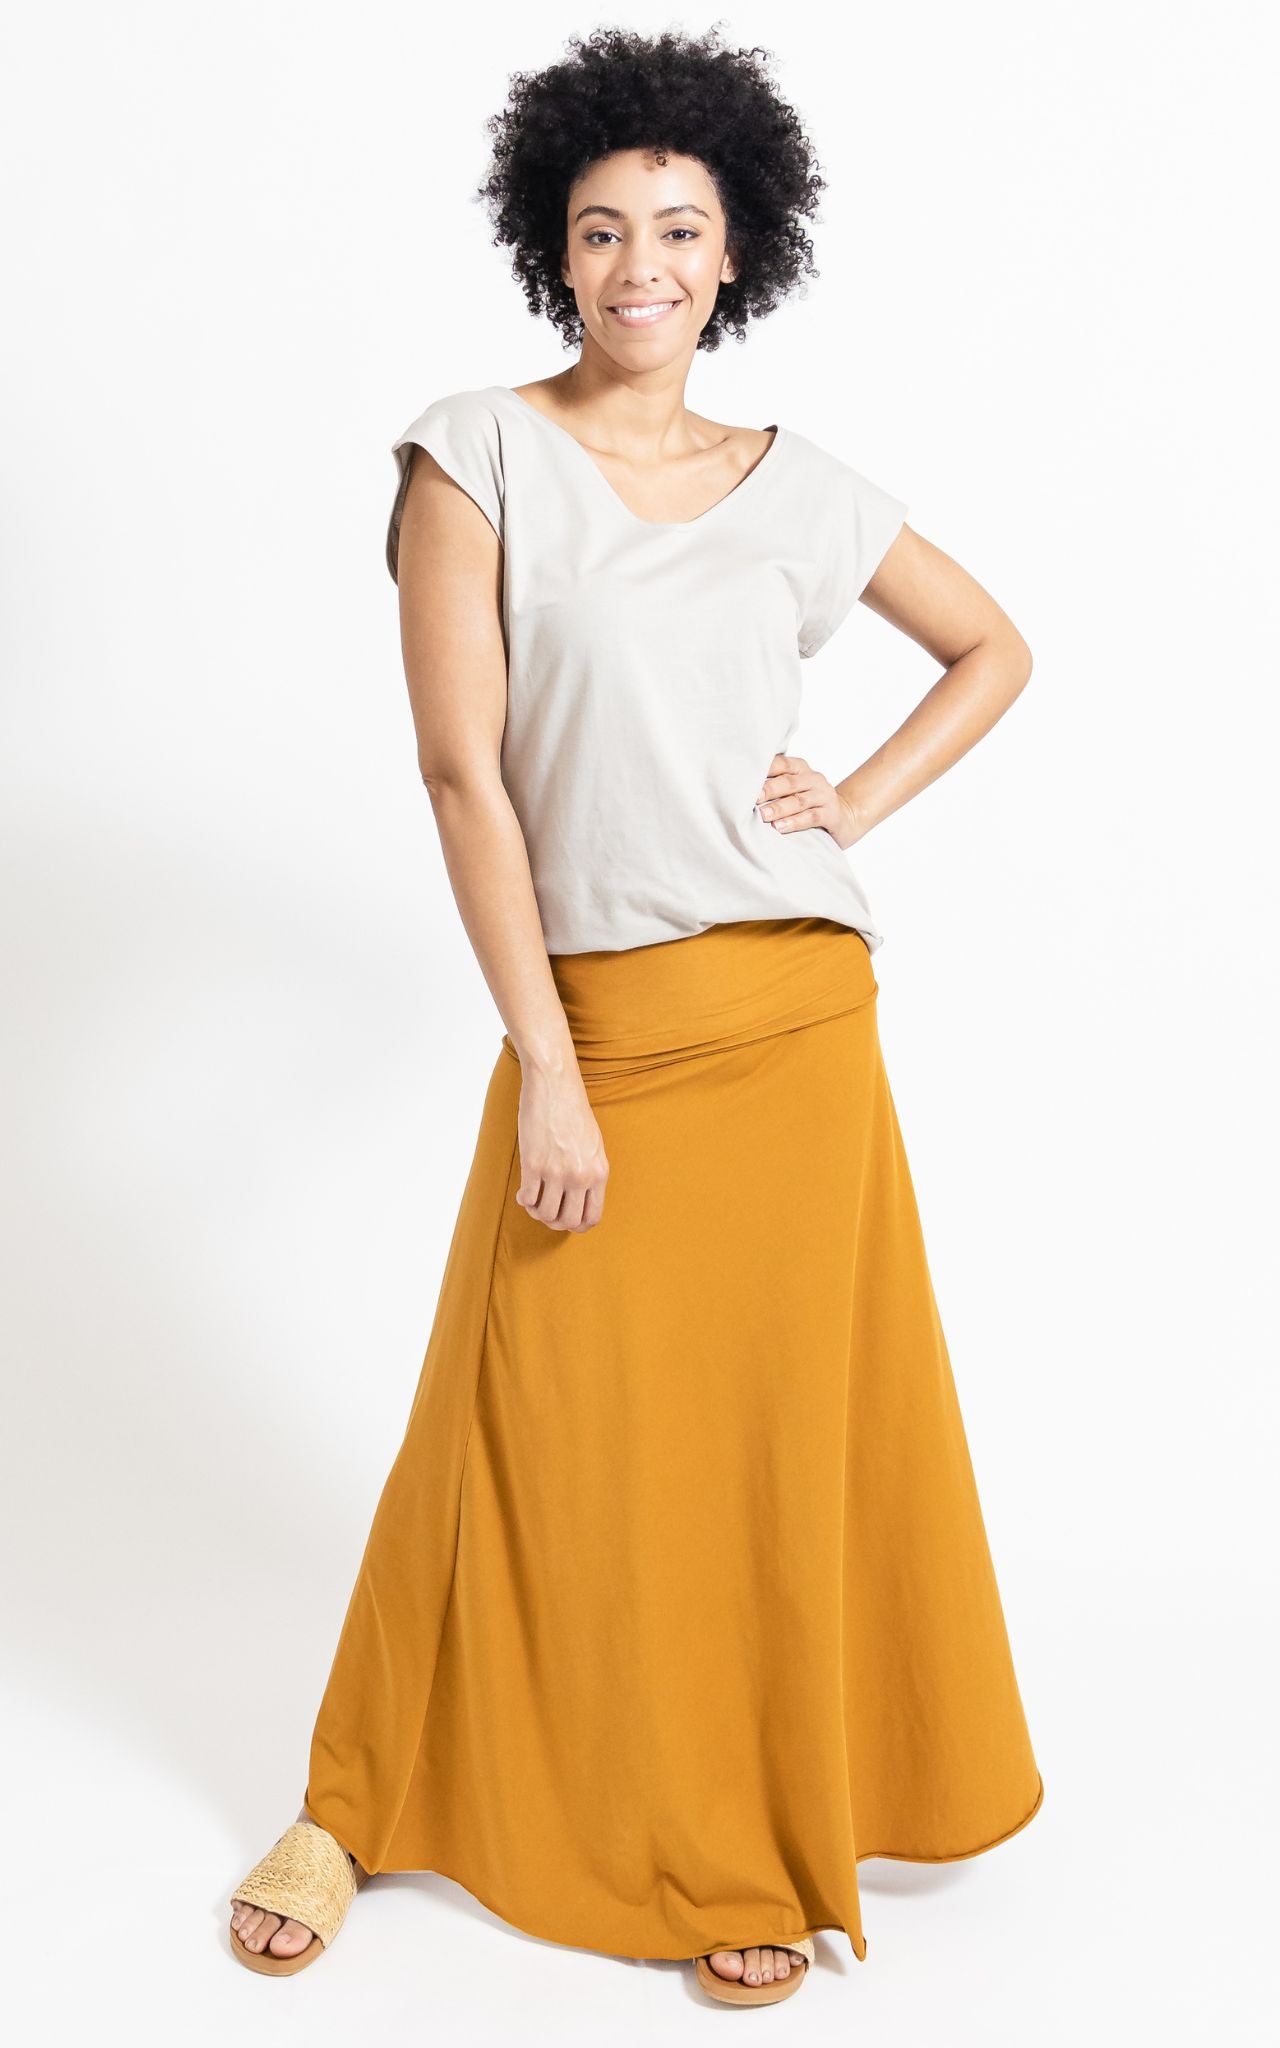 Surya Australia Organic Cotton Maxi 'Sonder' Skirt made in Nepal - Turmeric